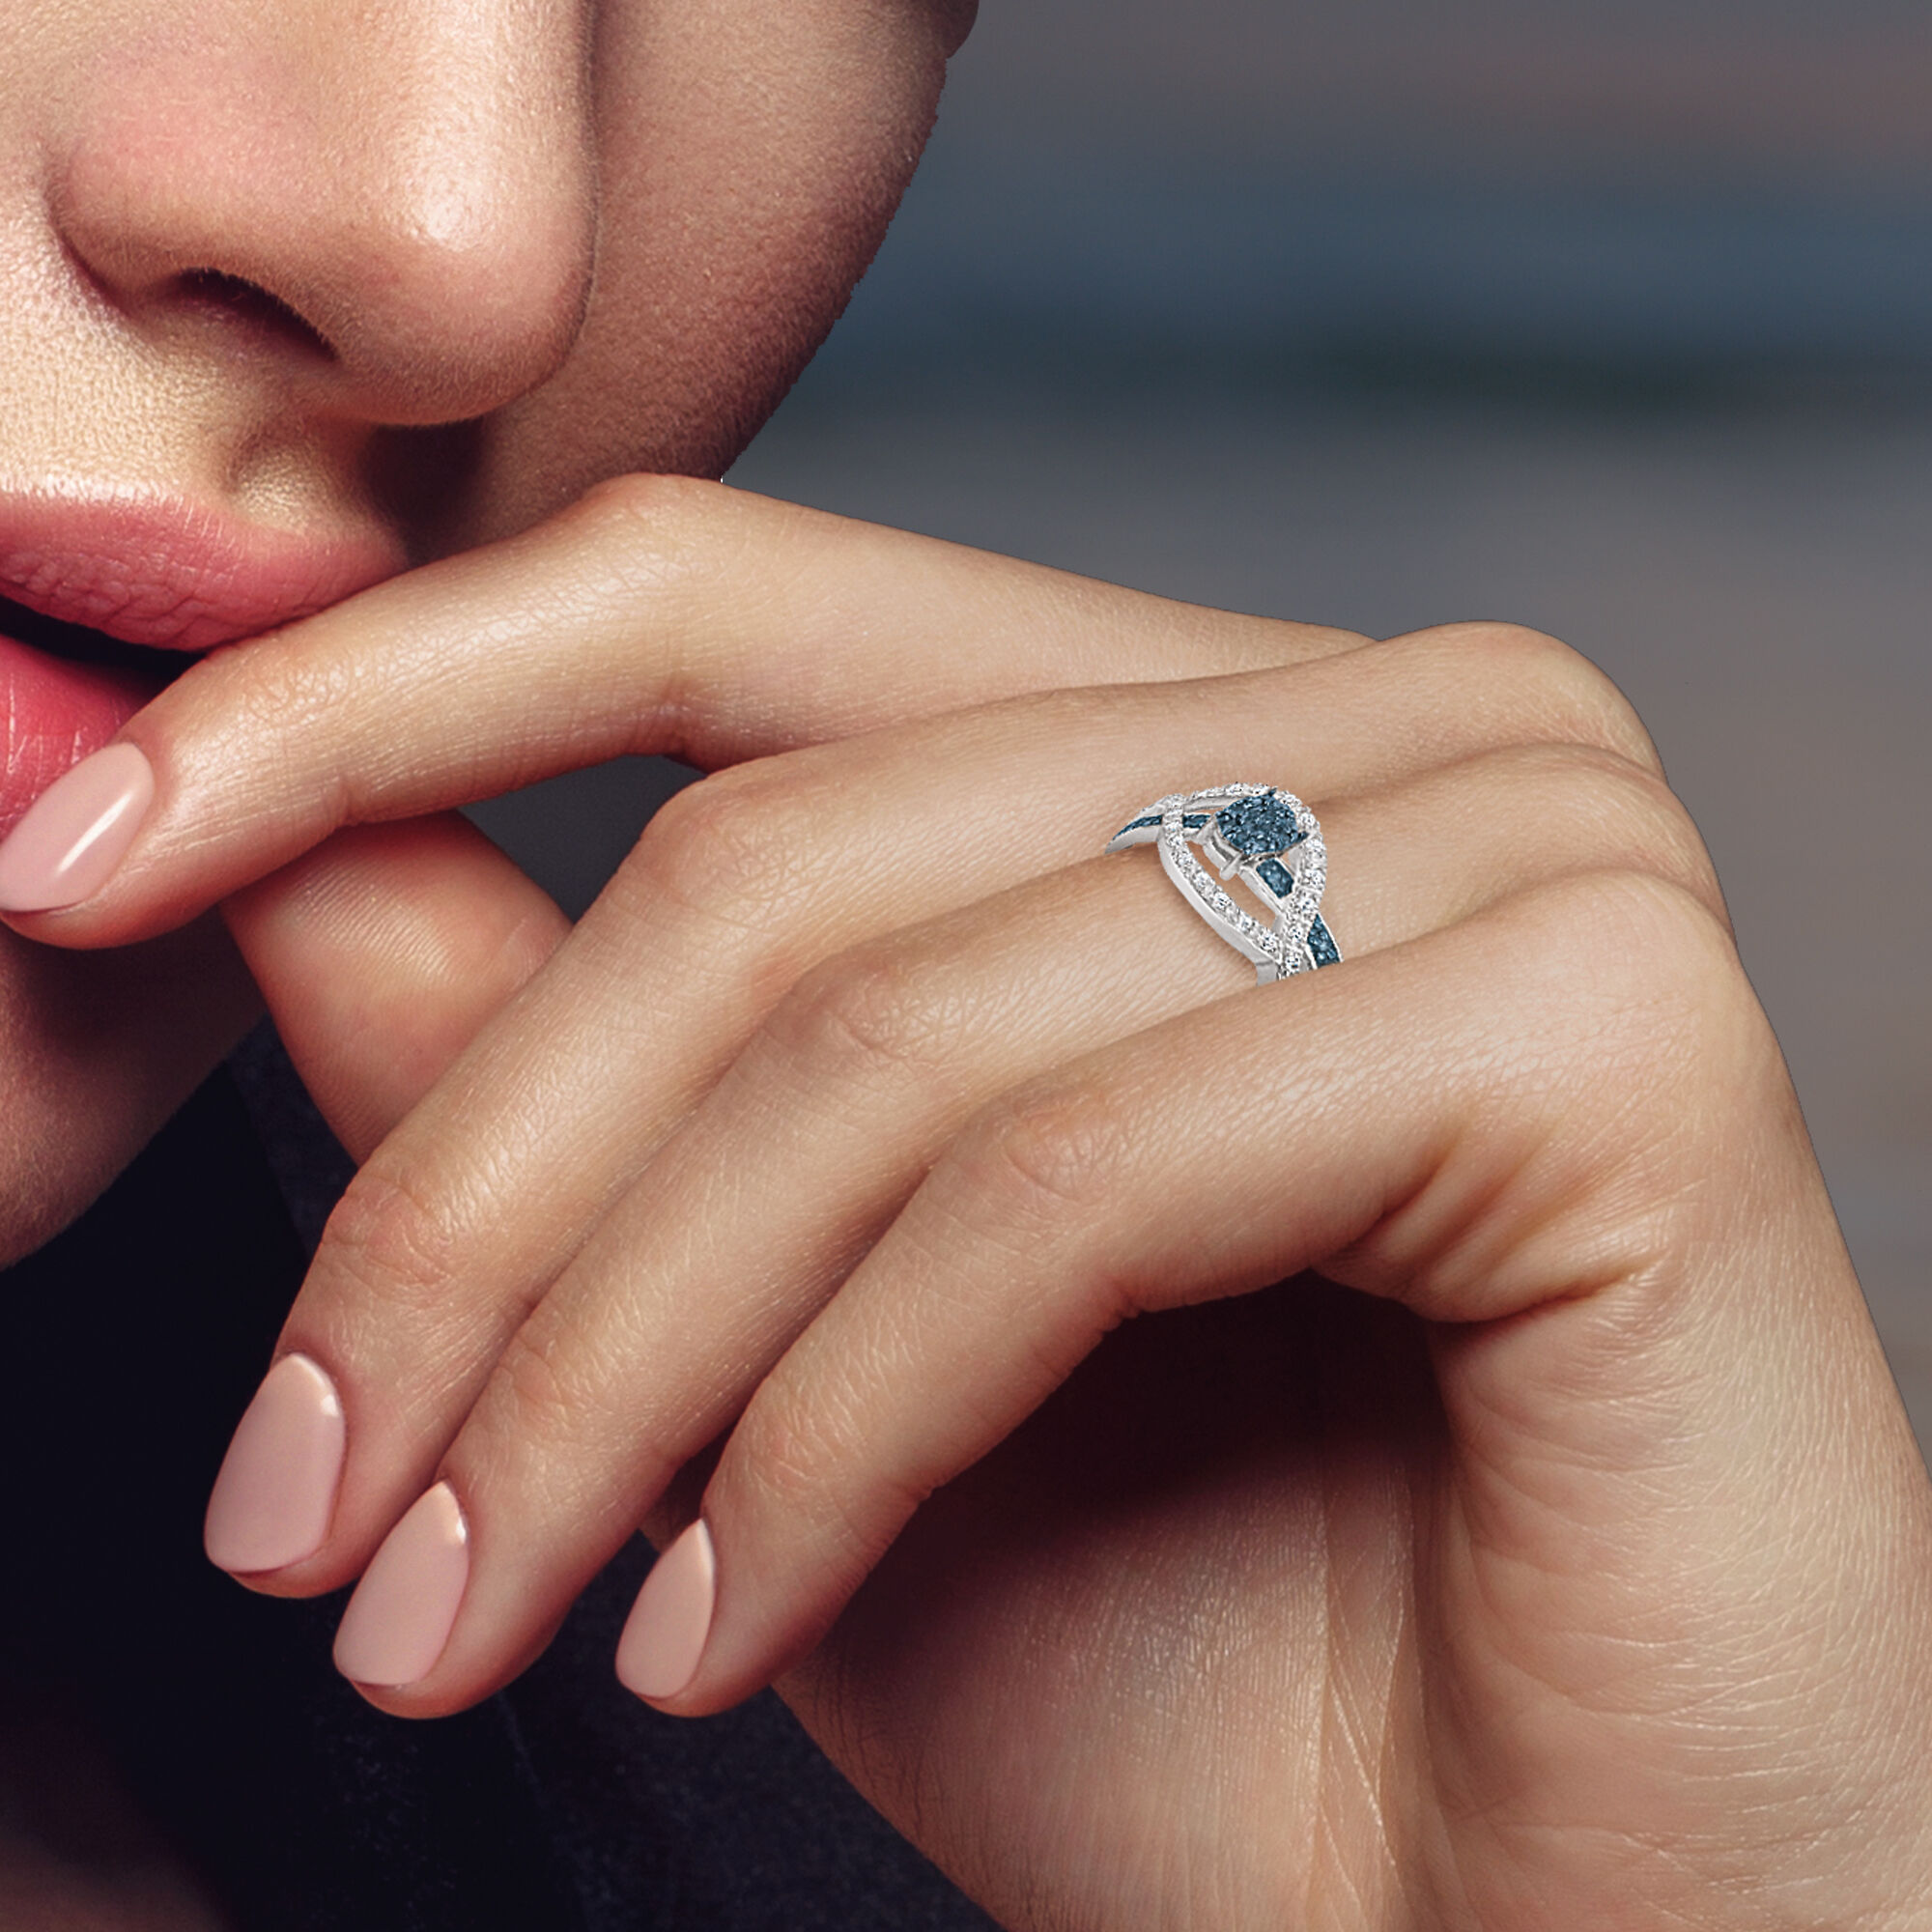 The Blue Wave Diamond Ring 11067 0023 m model